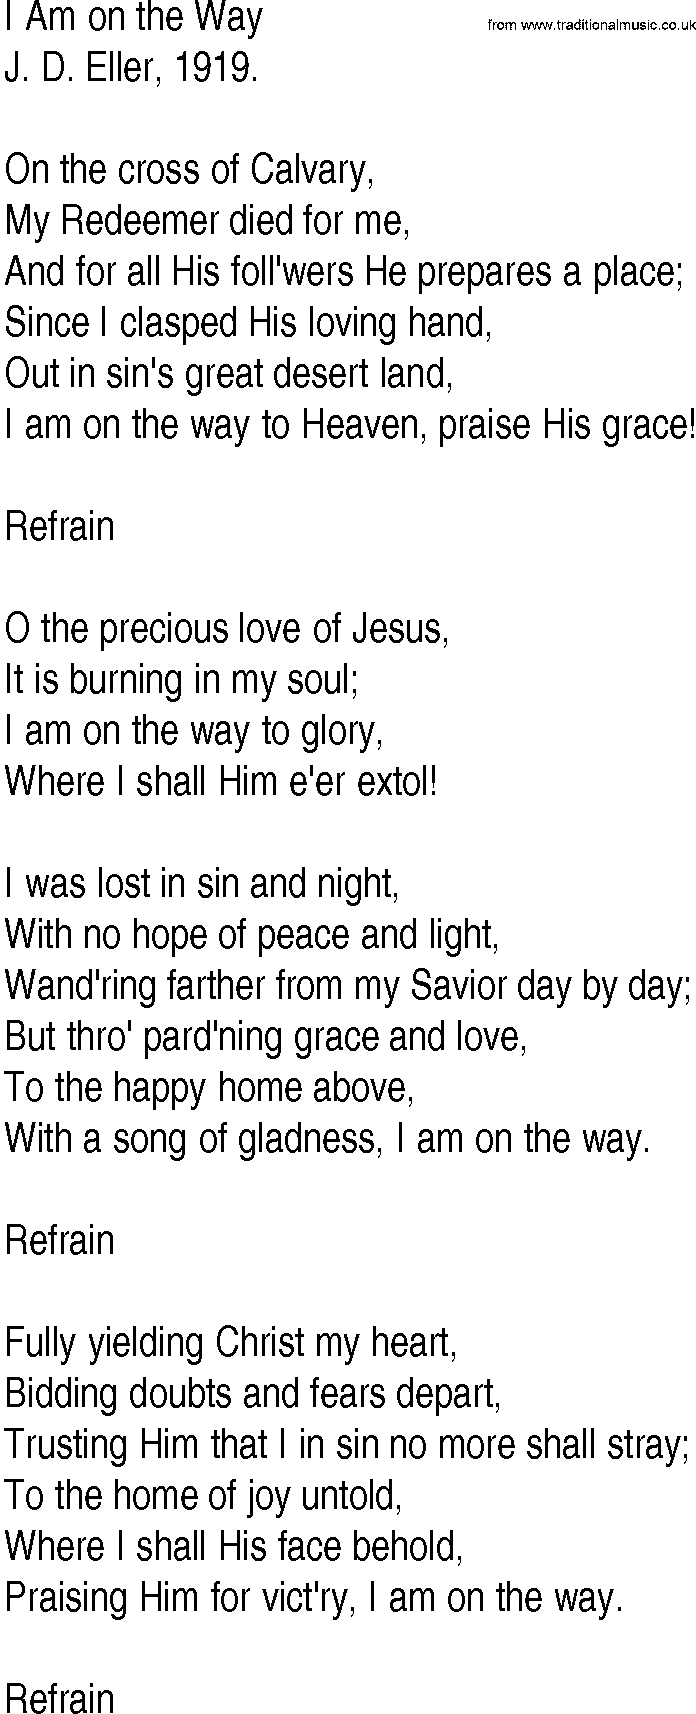 Hymn and Gospel Song: I Am on the Way by J D Eller lyrics